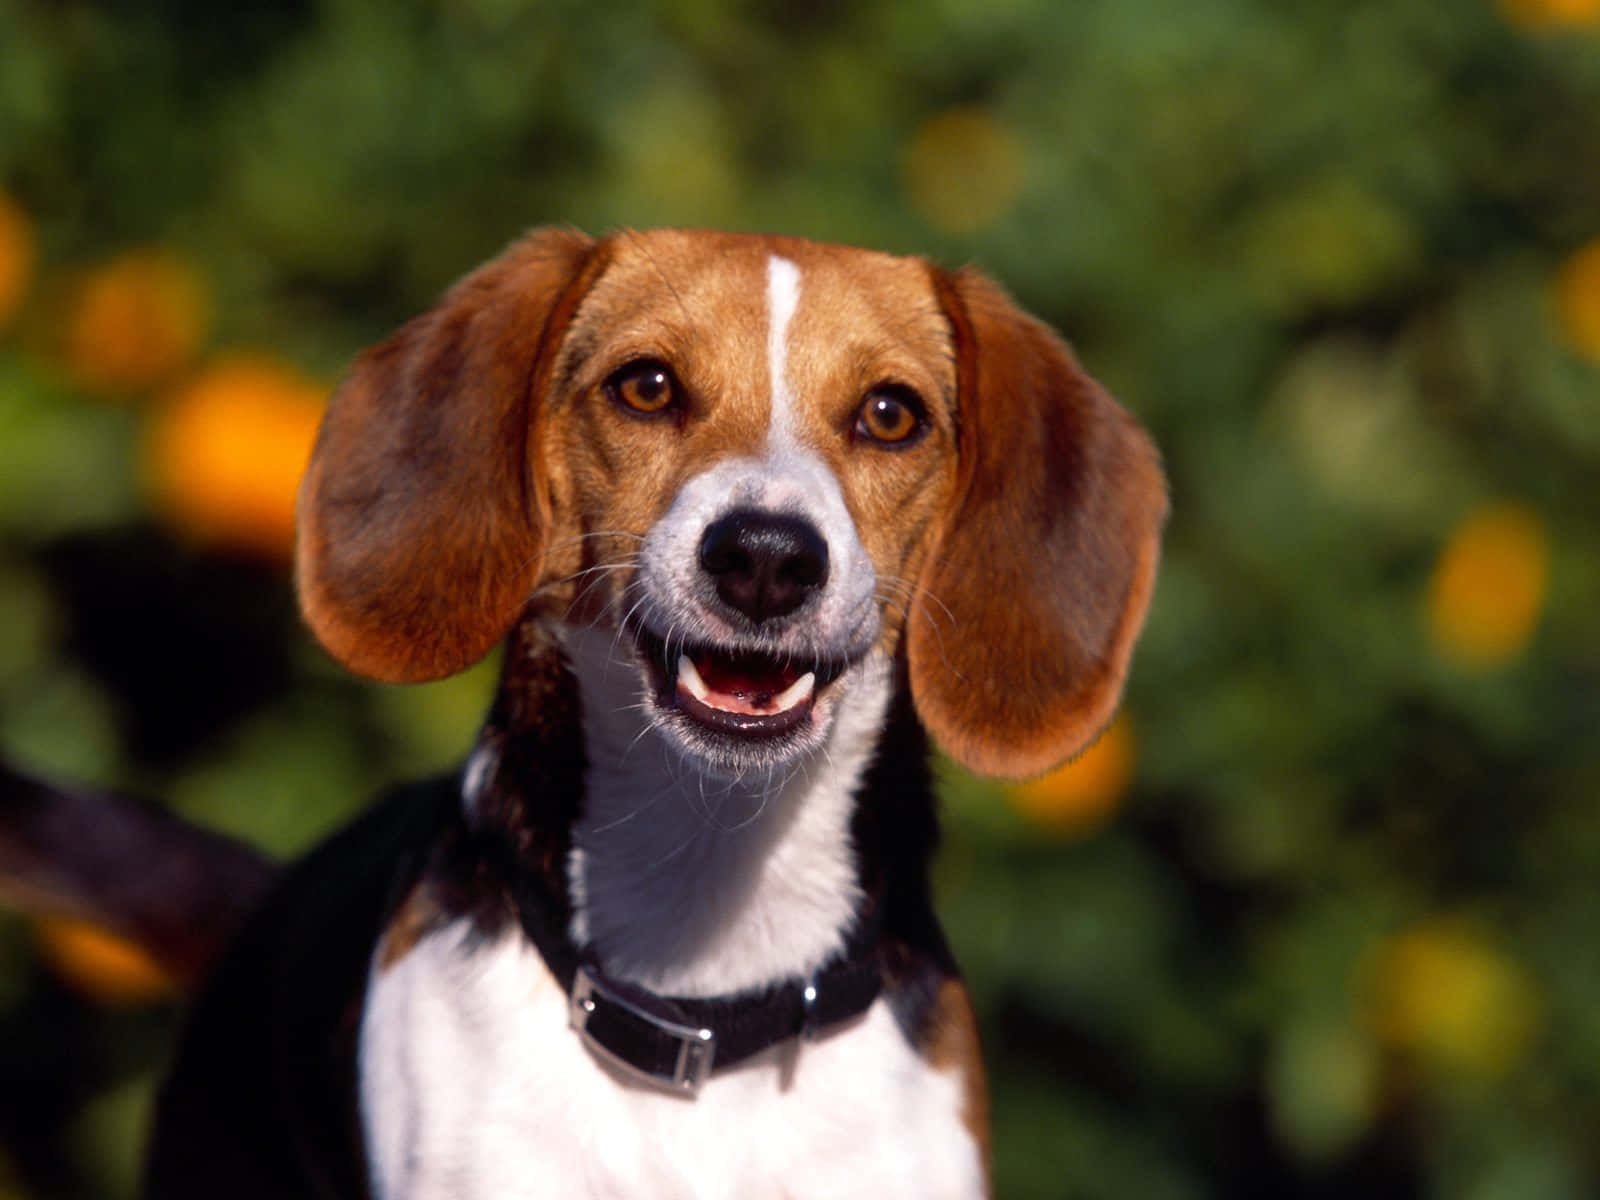 A happy Beagle pup ready for a walk!